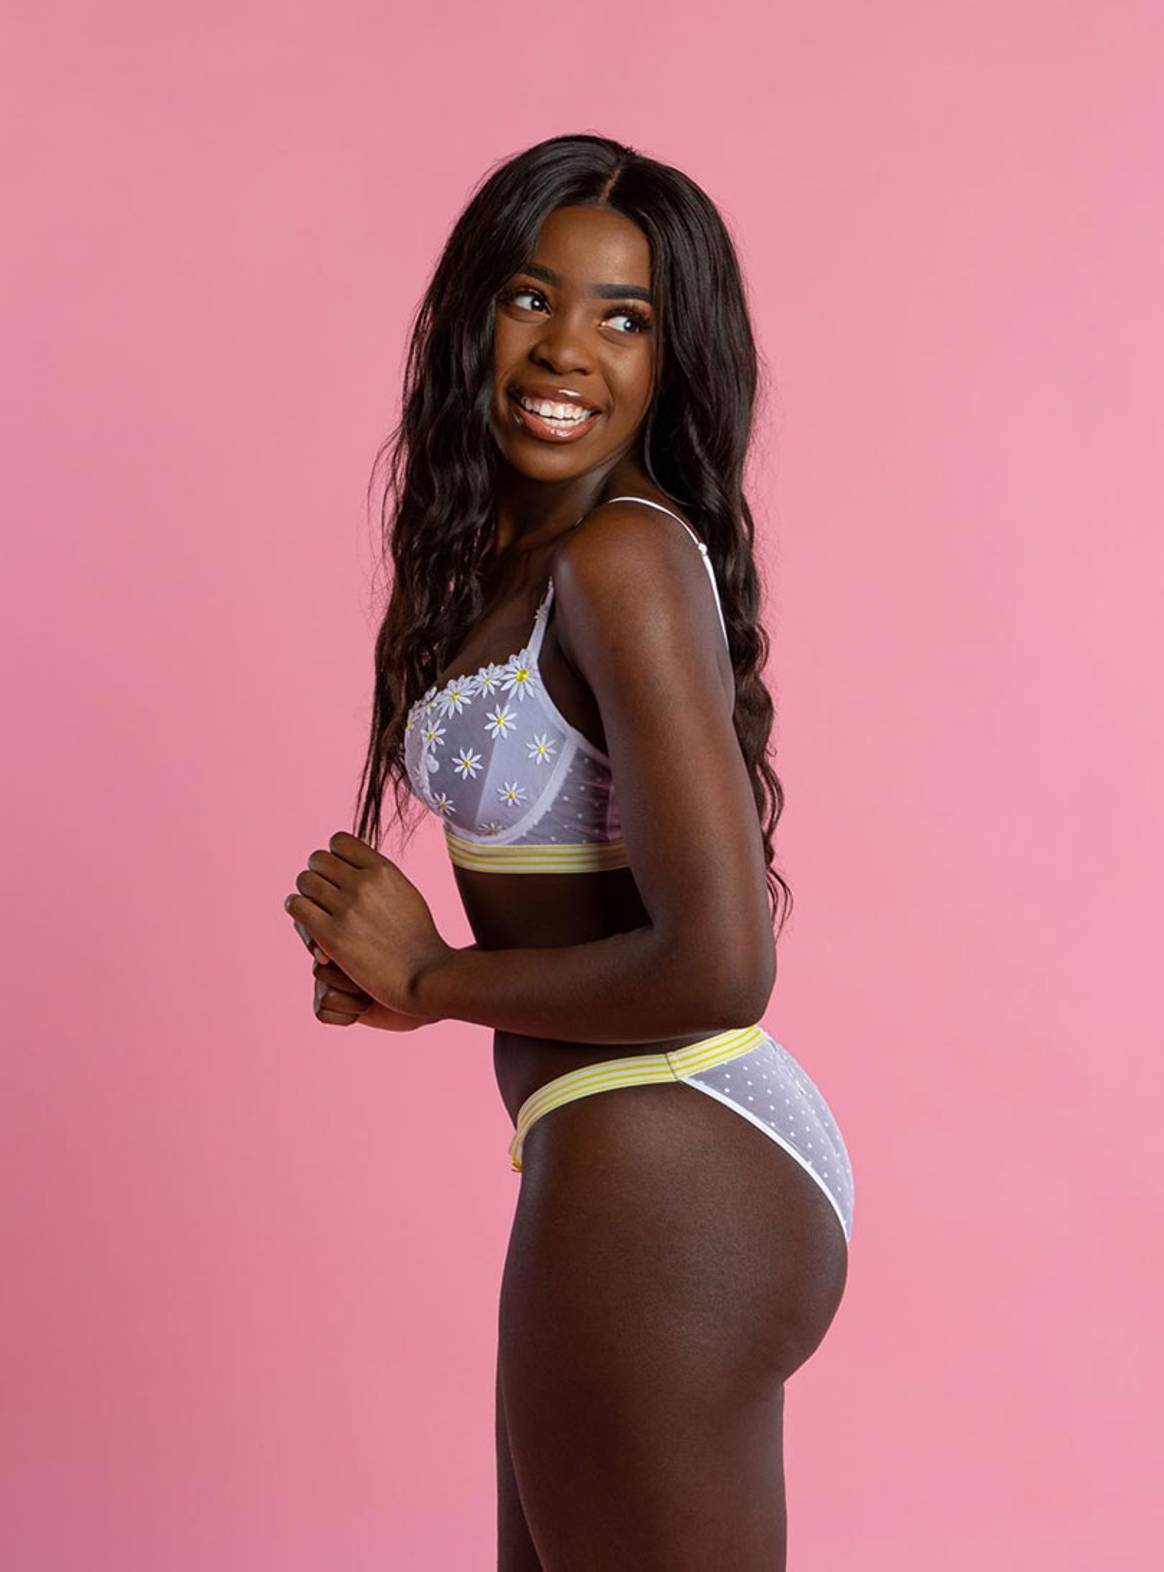 Boux Avenue launches its first unretouched lingerie campaign